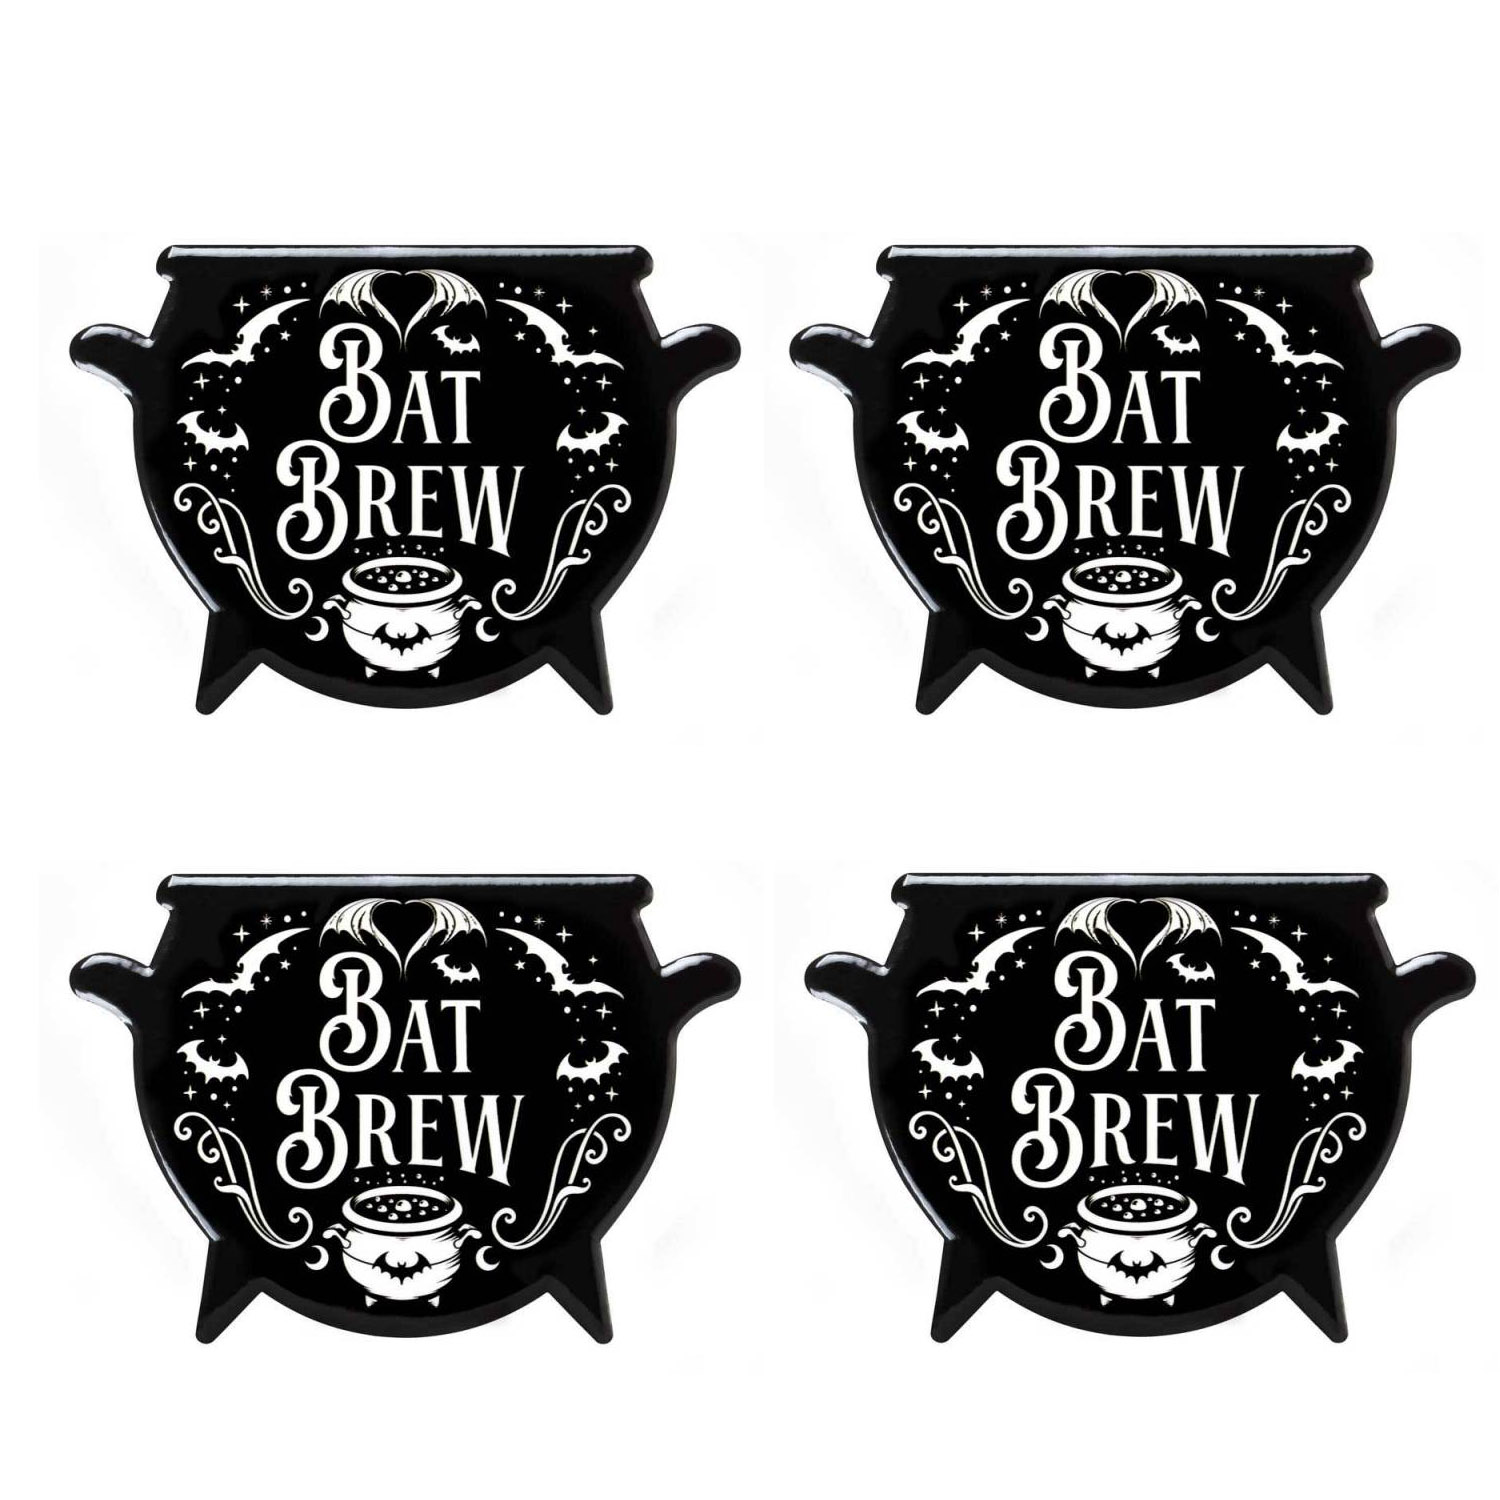 15167 Bat Brew Cauldron Coaster Set of 4